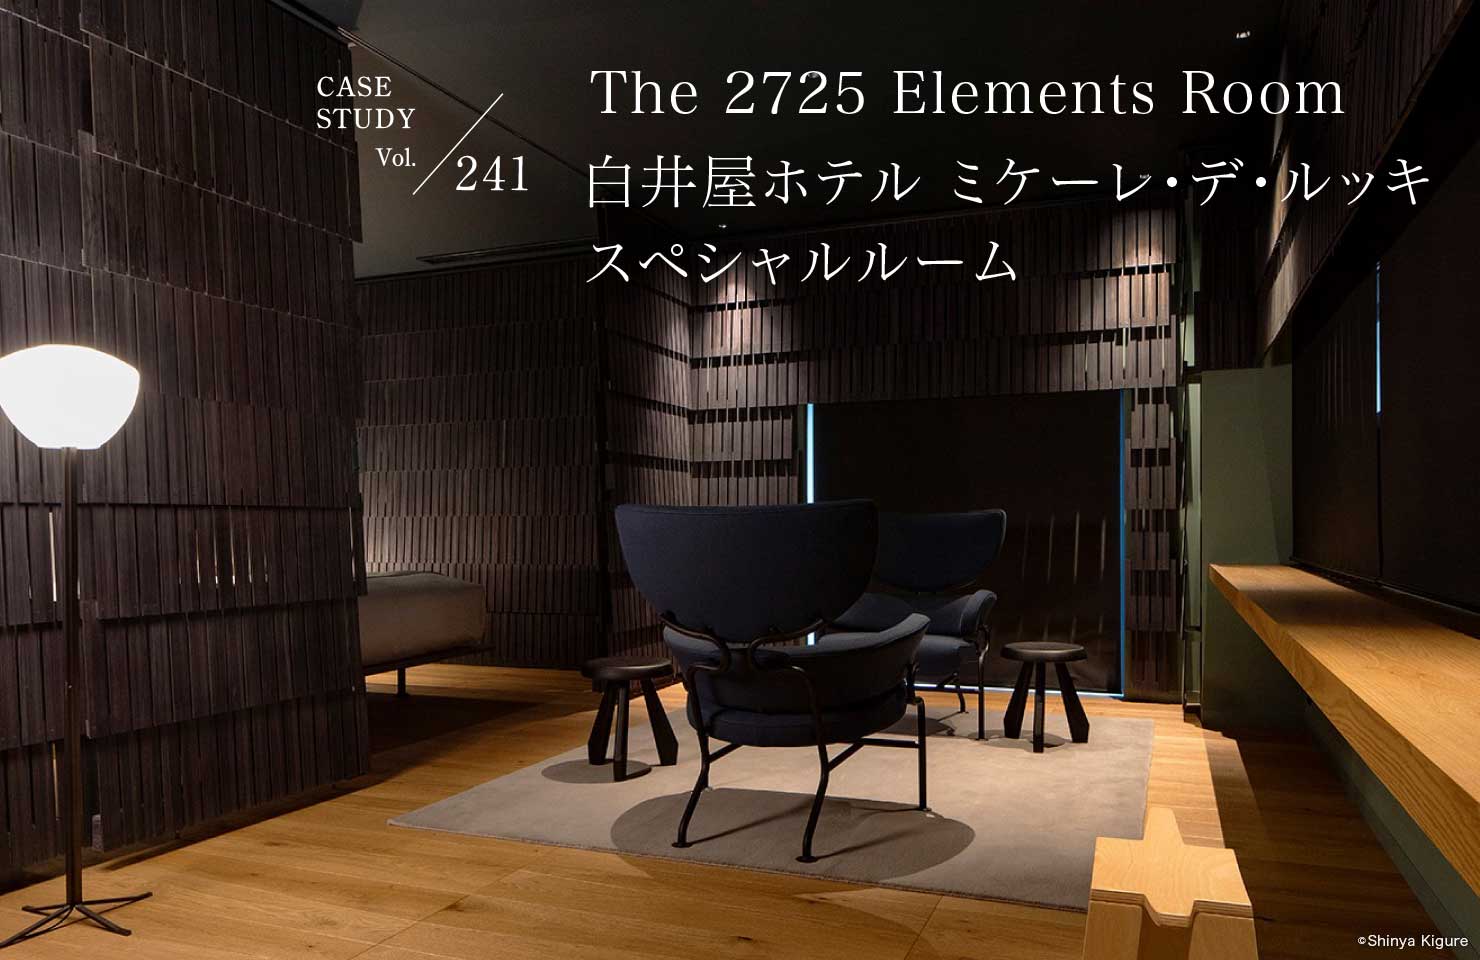 CASE STUDY Vol.241 The 2725 Elements Room 䉮ze ~P[EfEbL XyV[